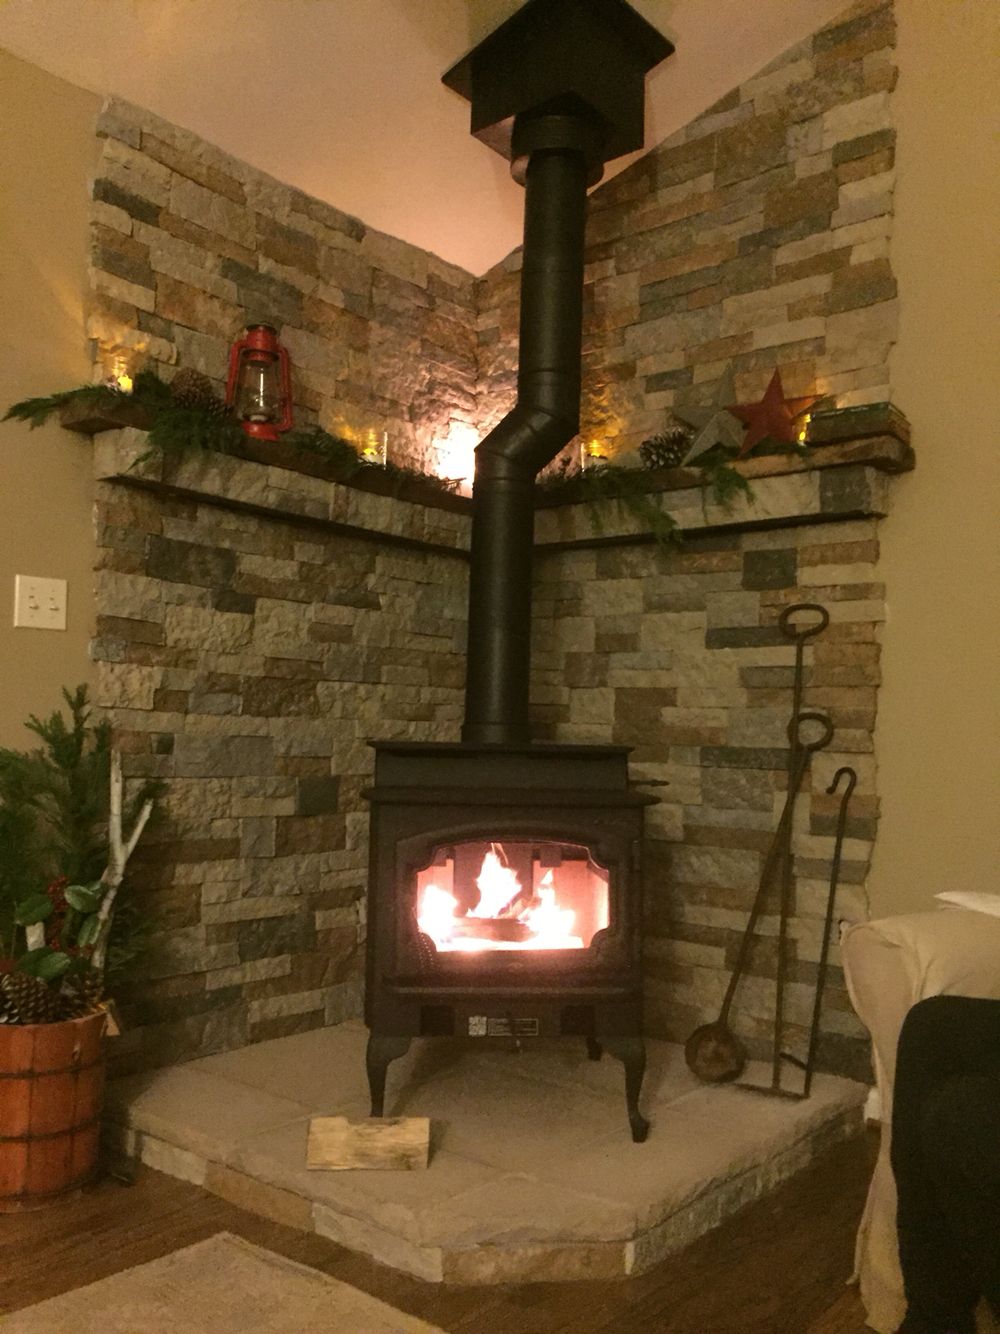 Majestic Fireplace Manual Fresh ÐÐ°Ð¼Ð¸Ð½Ñ Ð ÑÑÑÐ¸Ðµ Ð¸Ð·Ð¾Ð±ÑÐ°Ð¶ÐµÐ½Ð¸Ñ 109